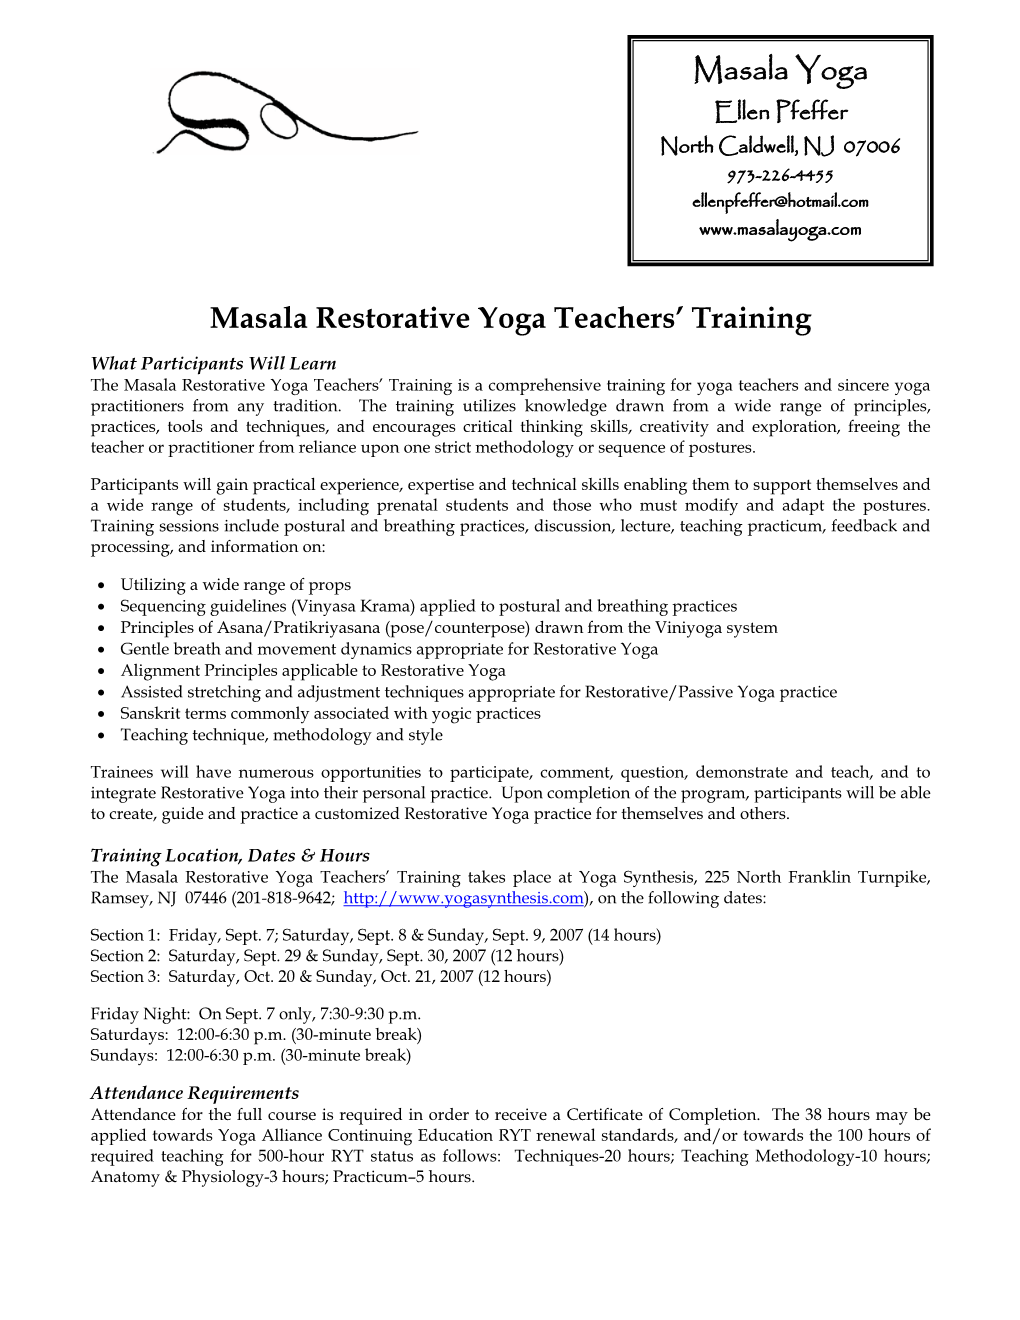 Masala Restorative Yoga Teachers' Training Masala Yoga